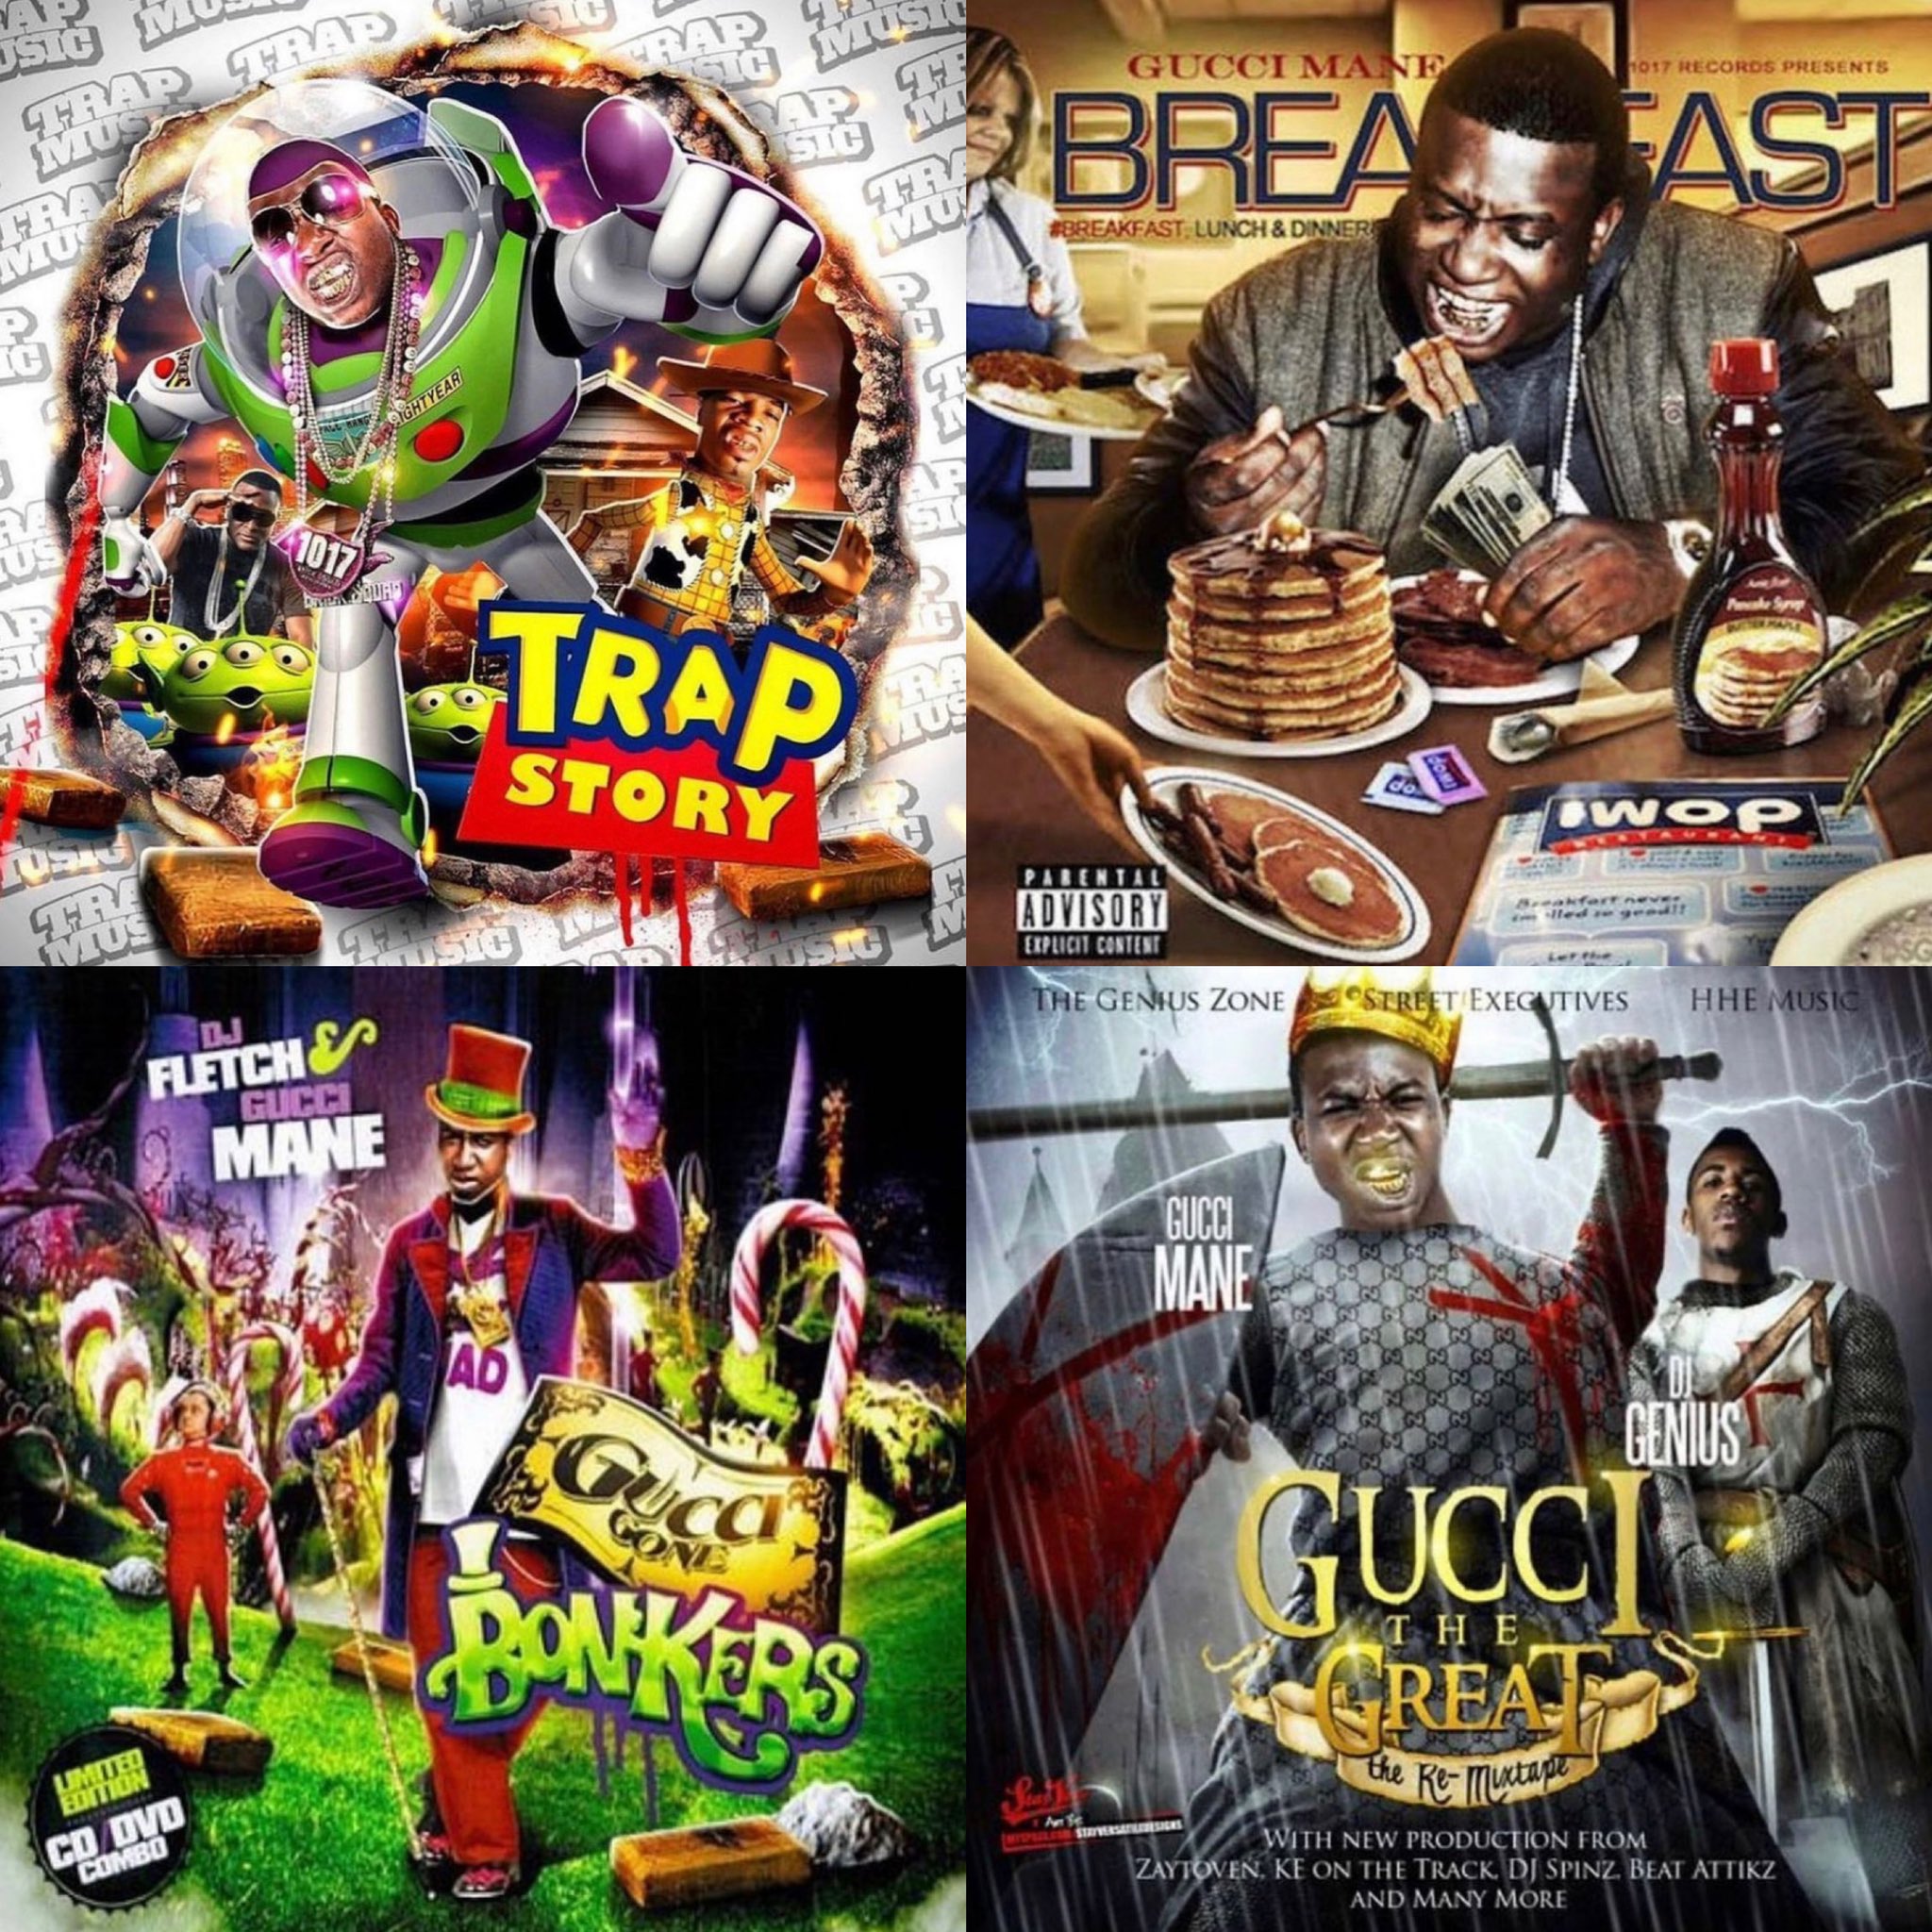 Hoodville on Twitter: "Gucci Mane got the best mixtape covers / Twitter